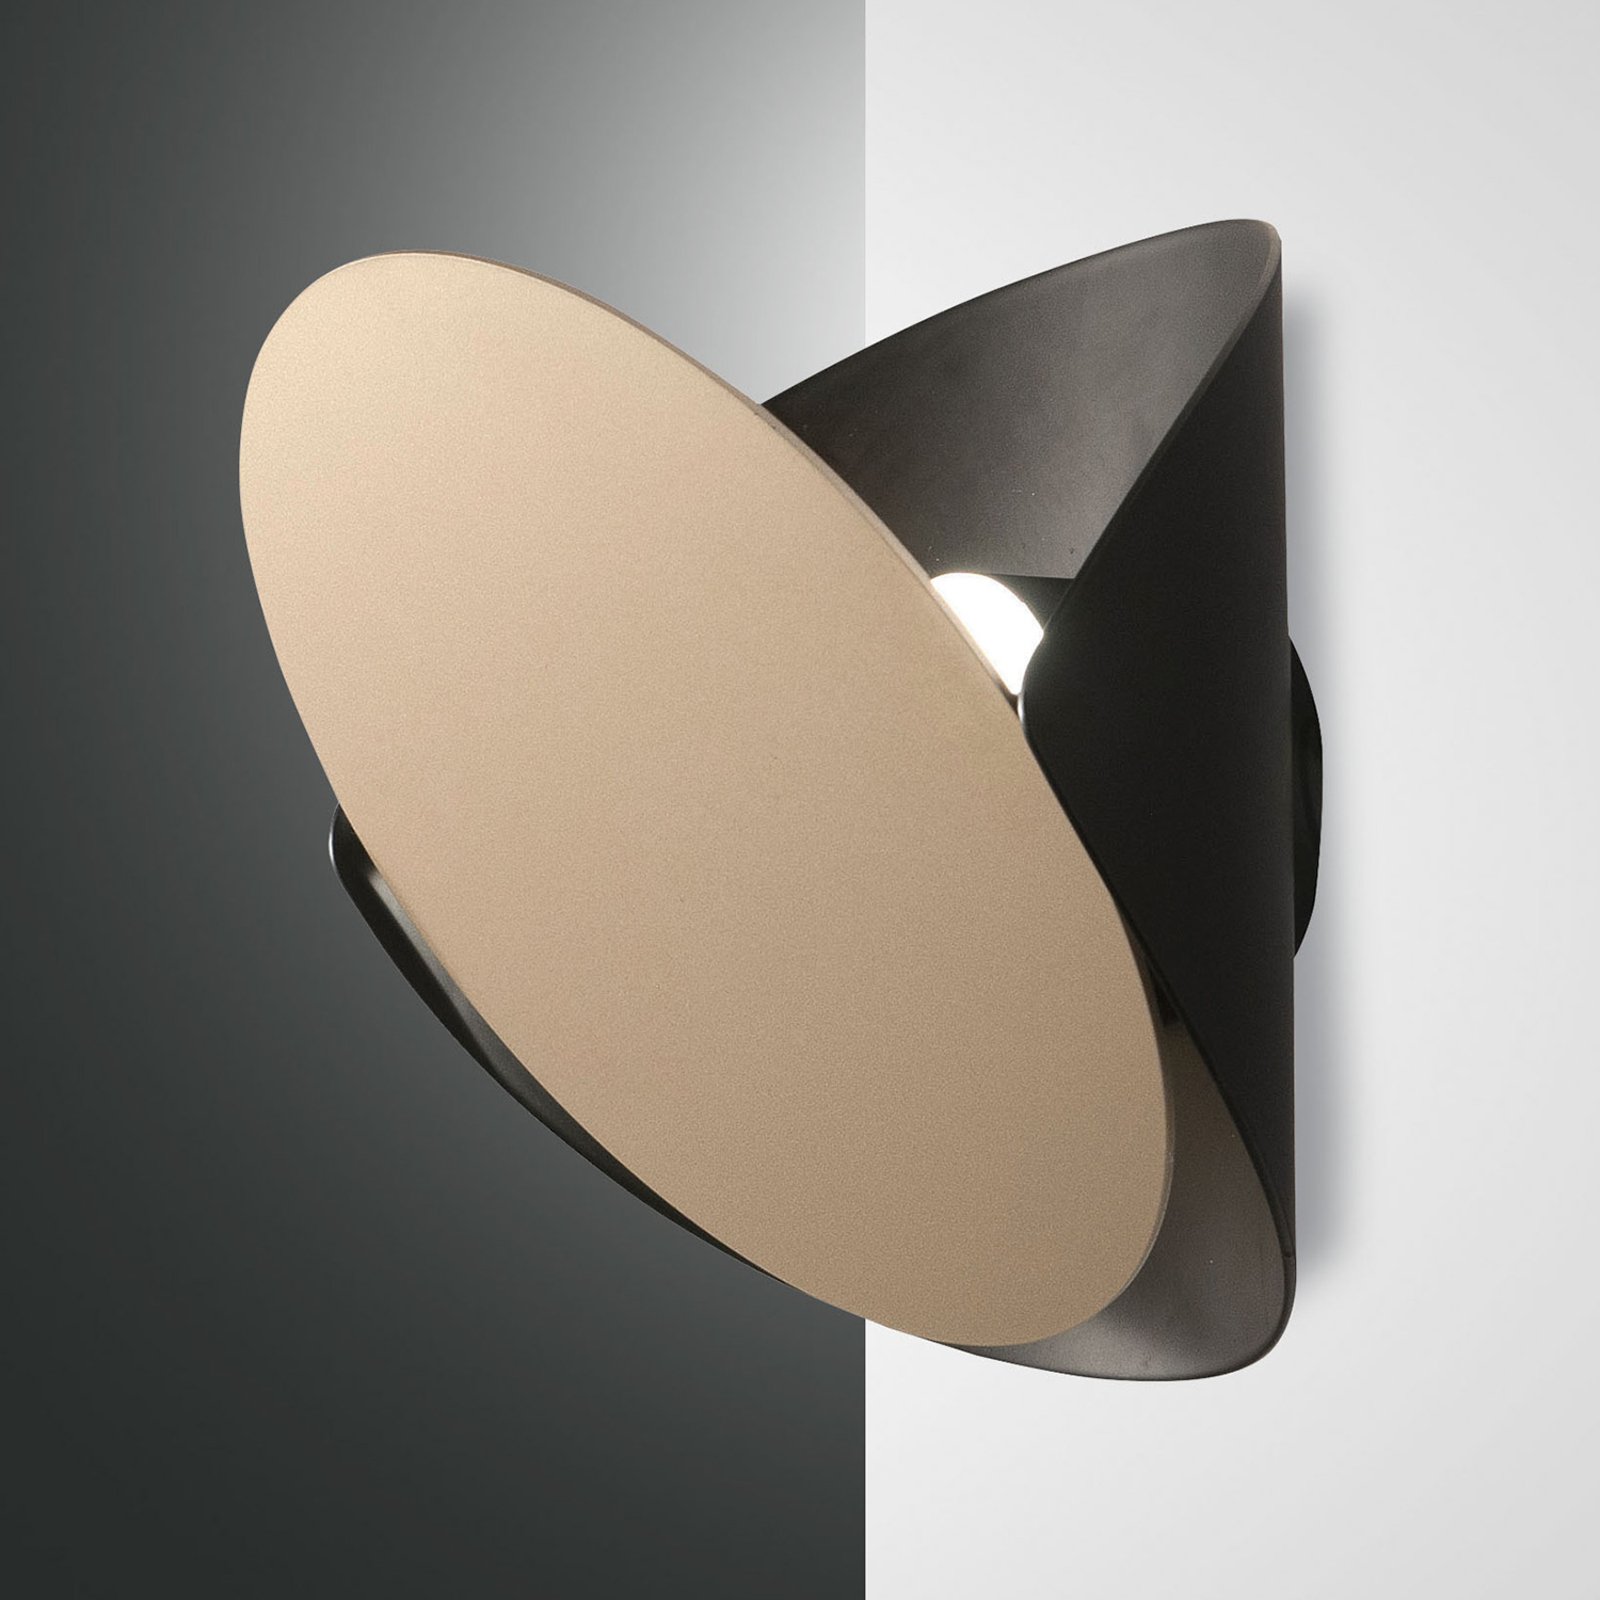 LED-vägglampa Shield, dimbar, svart-guld